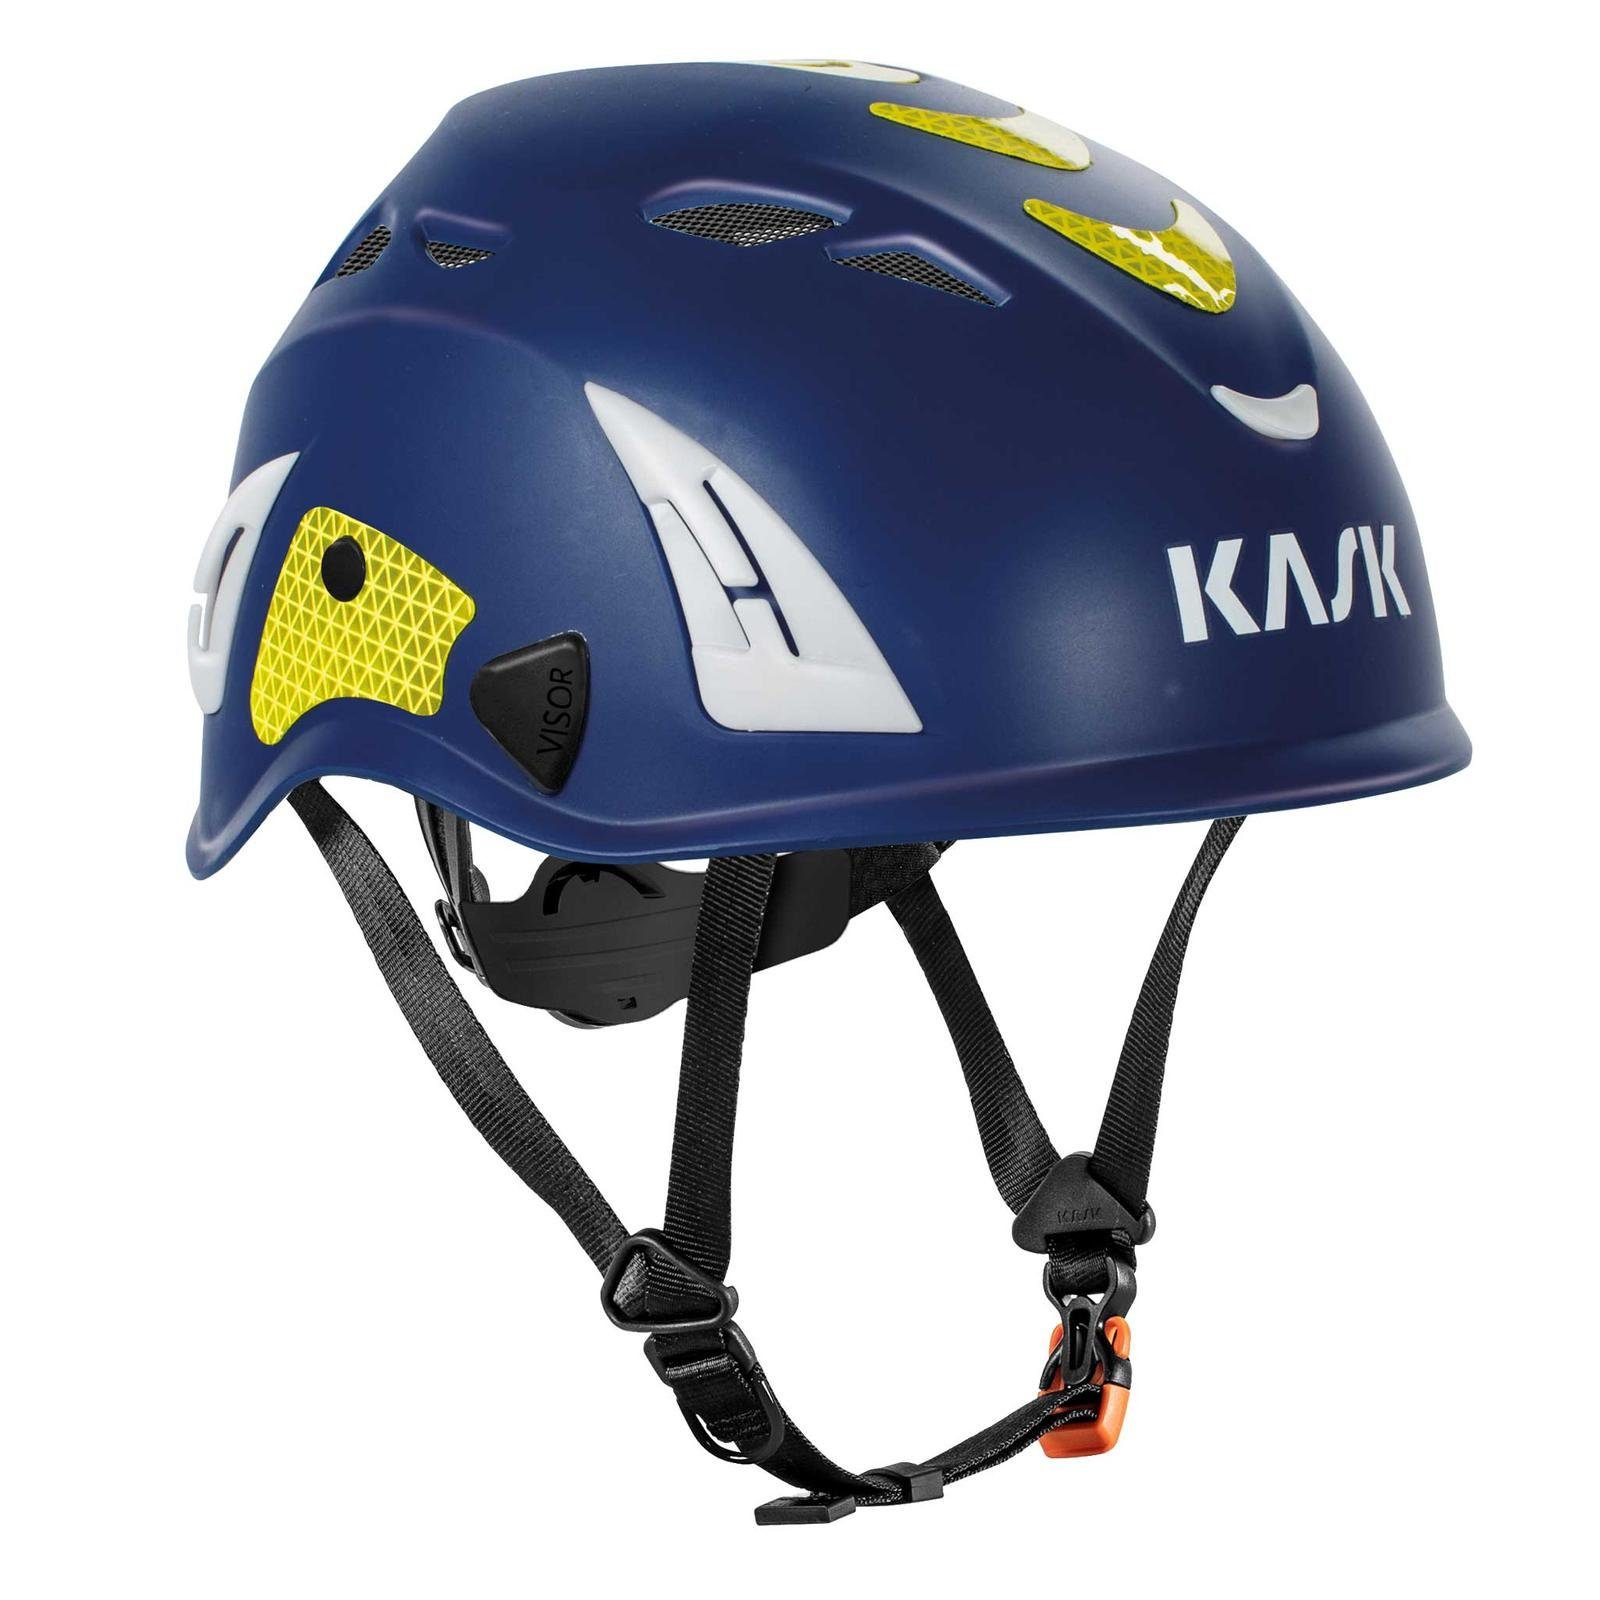 Kask Schutzhelm Bergsteigerhelm, Industriekletterhelm Plasma HI VIZ, Arbeitsschutzhelm blau-gelb | Kopfschutz